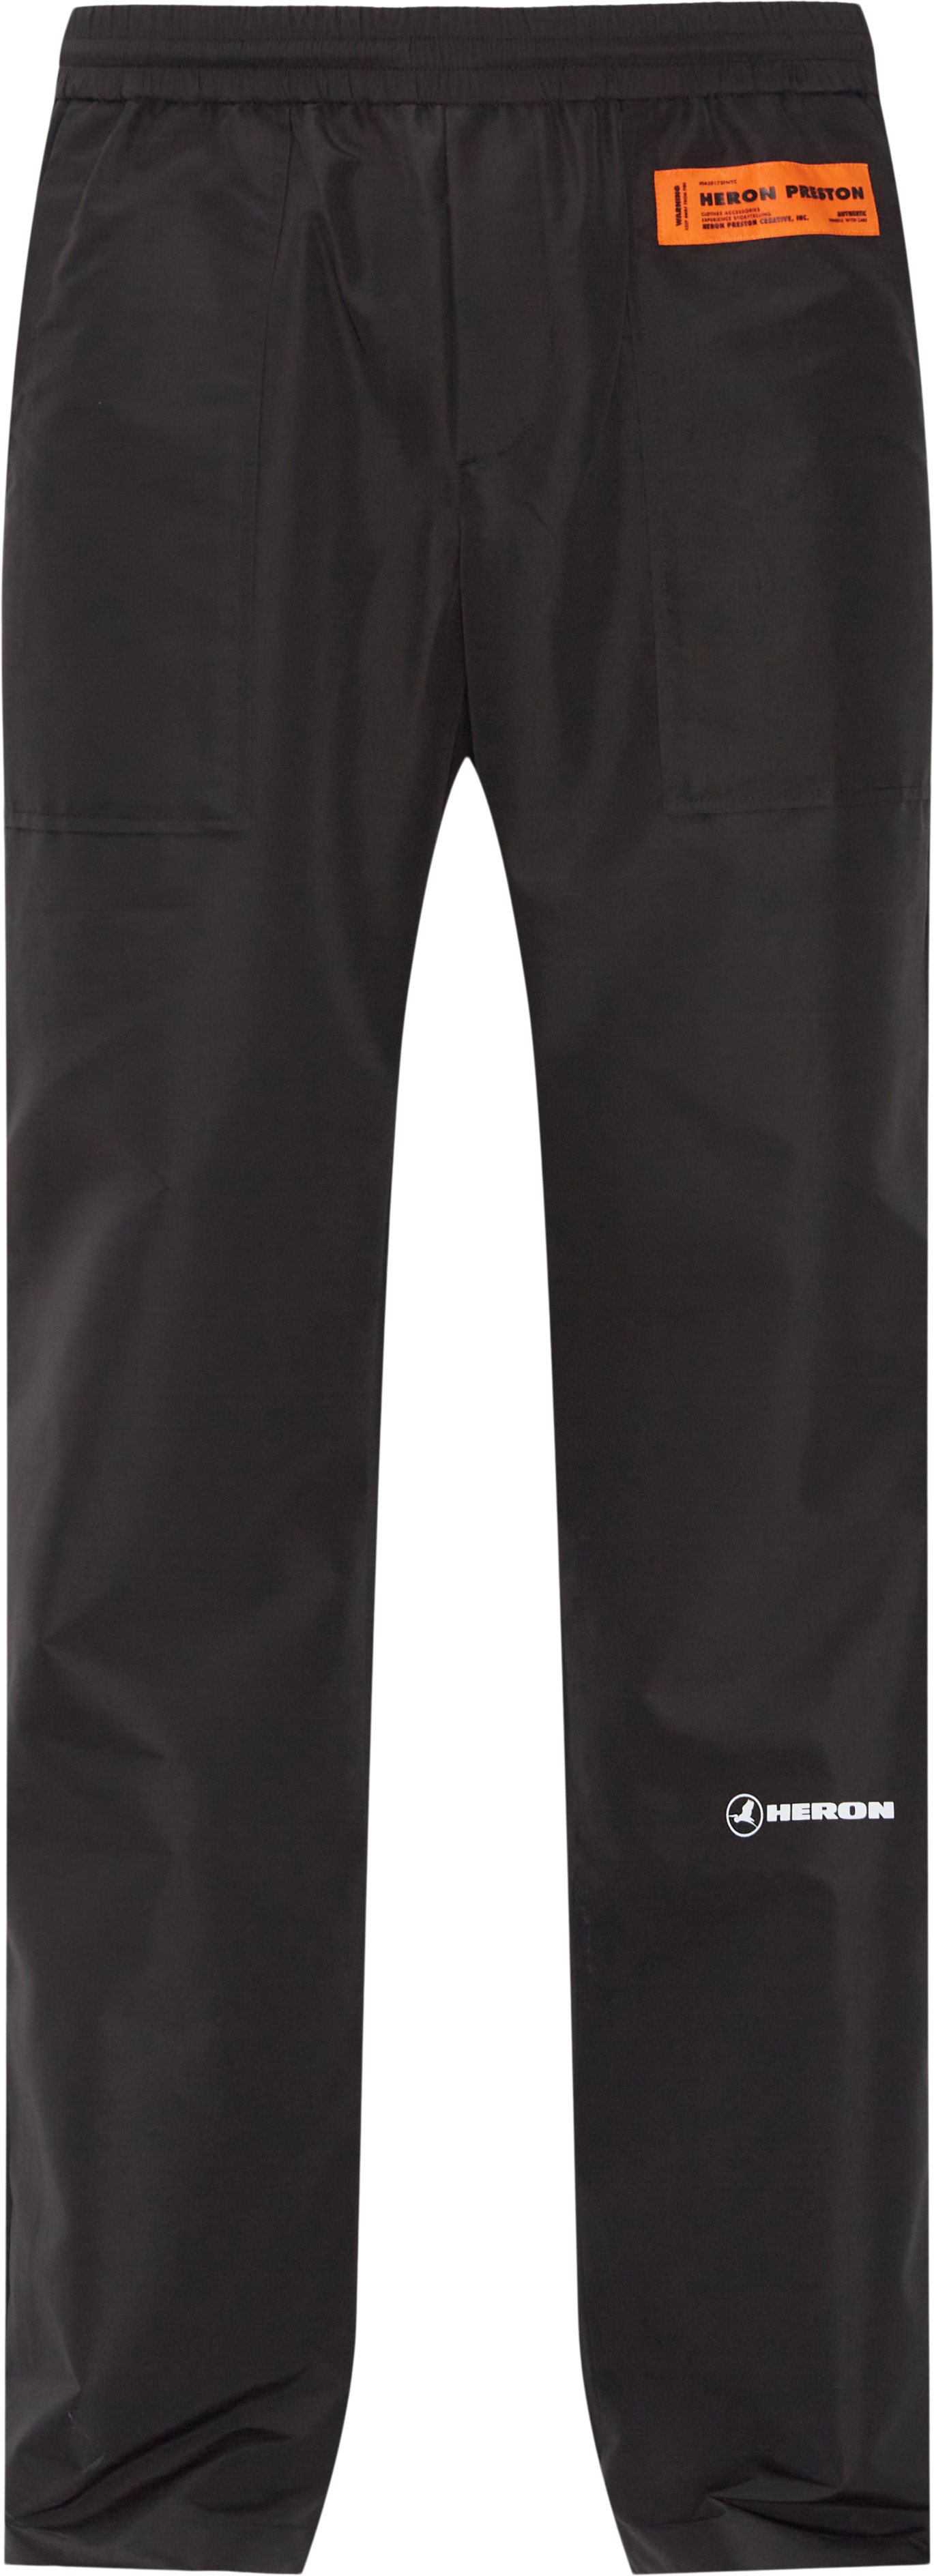 Trousers - Comfort fit - Black